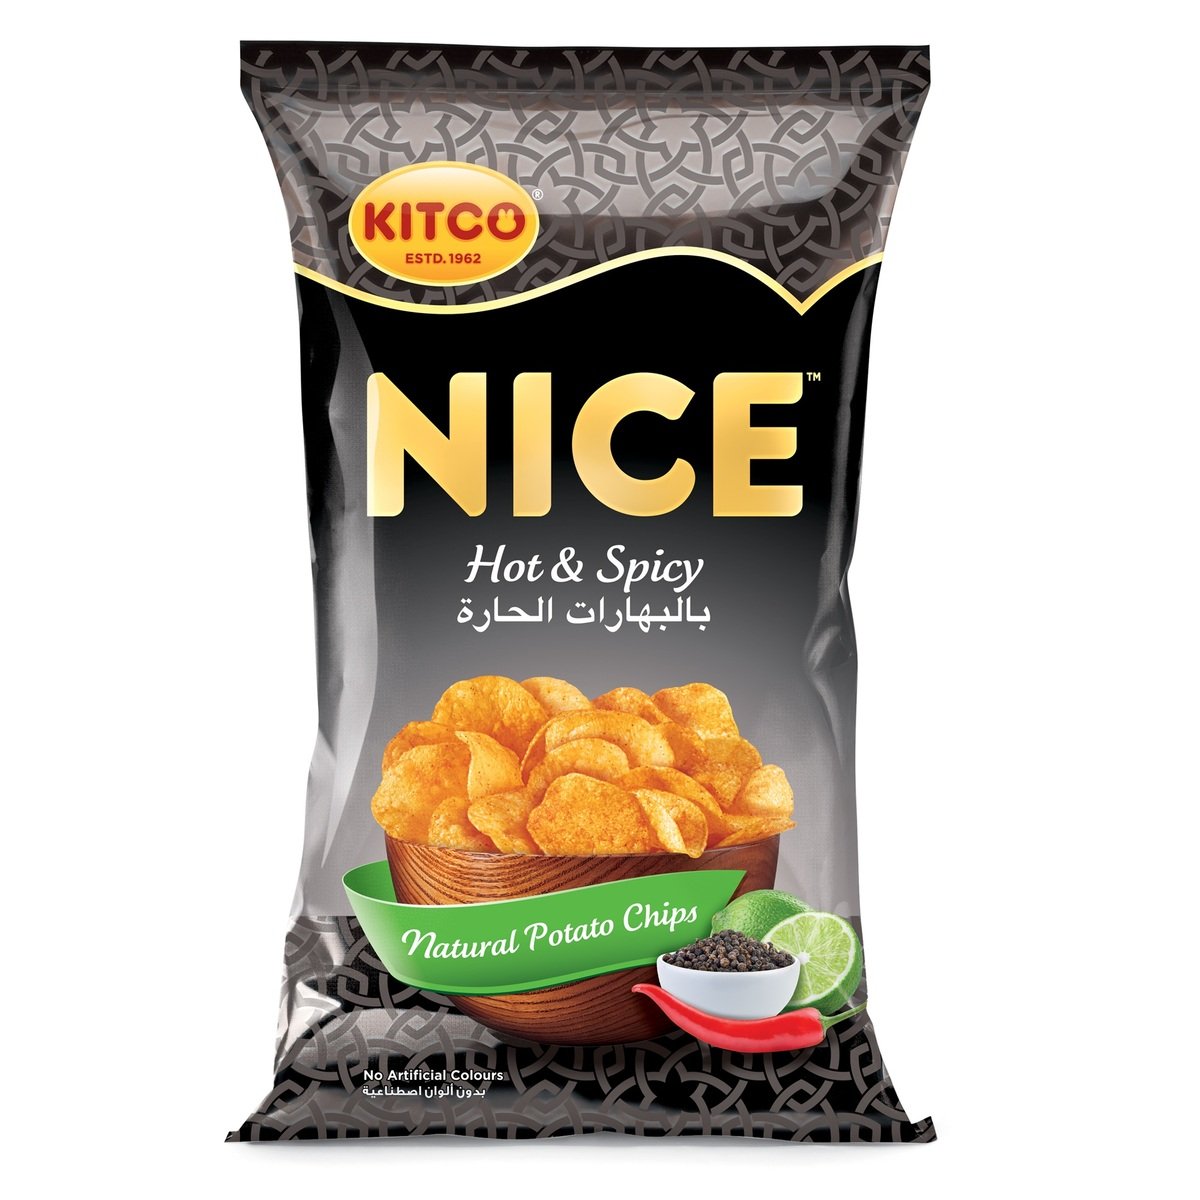 Kitco Nice Hot & Spicy Potato Chips 45 g